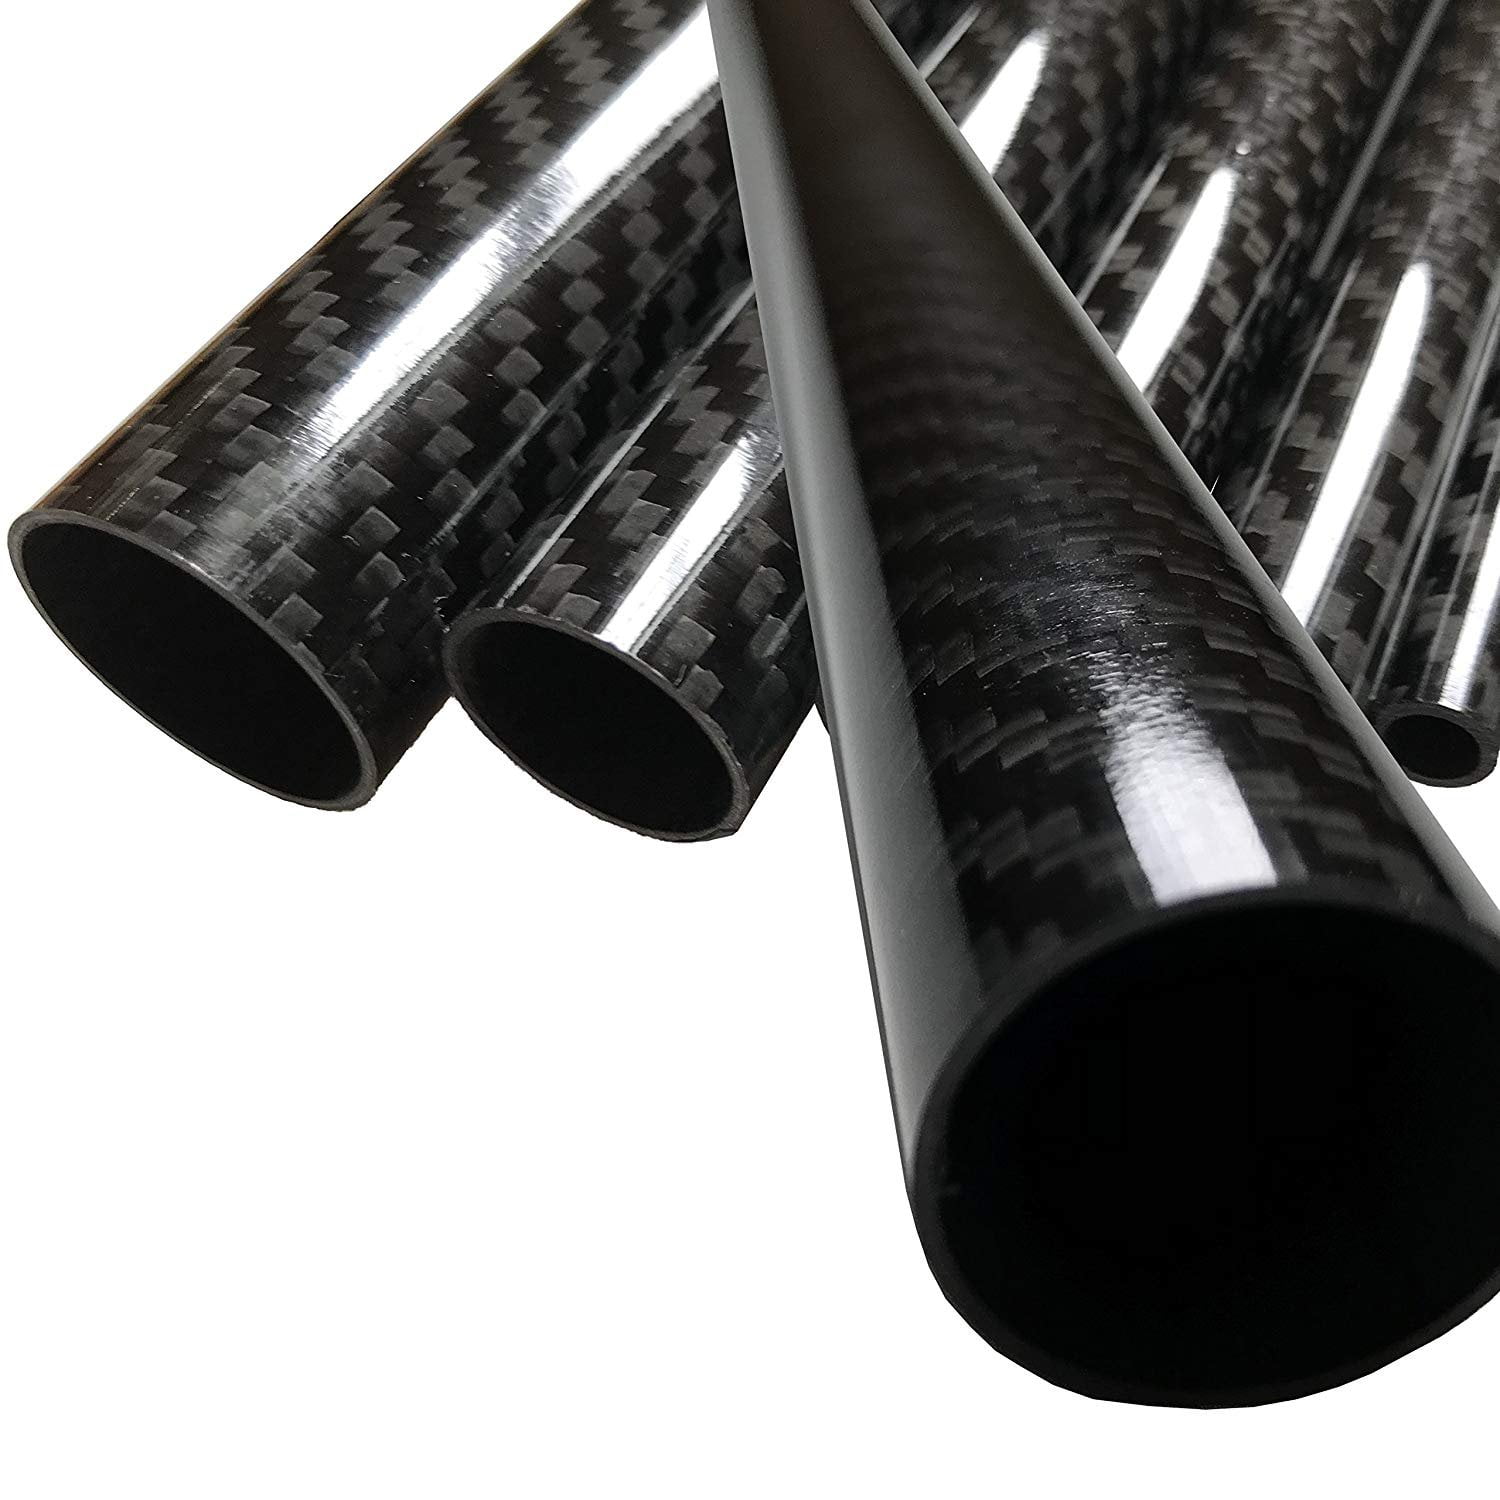 Tubes 2 3K Roll Wrapped 100% Carbon Fiber Tube Glossy Surface - Carbon Fiber Tubes 25mm x 23mm x 1000mm 2 